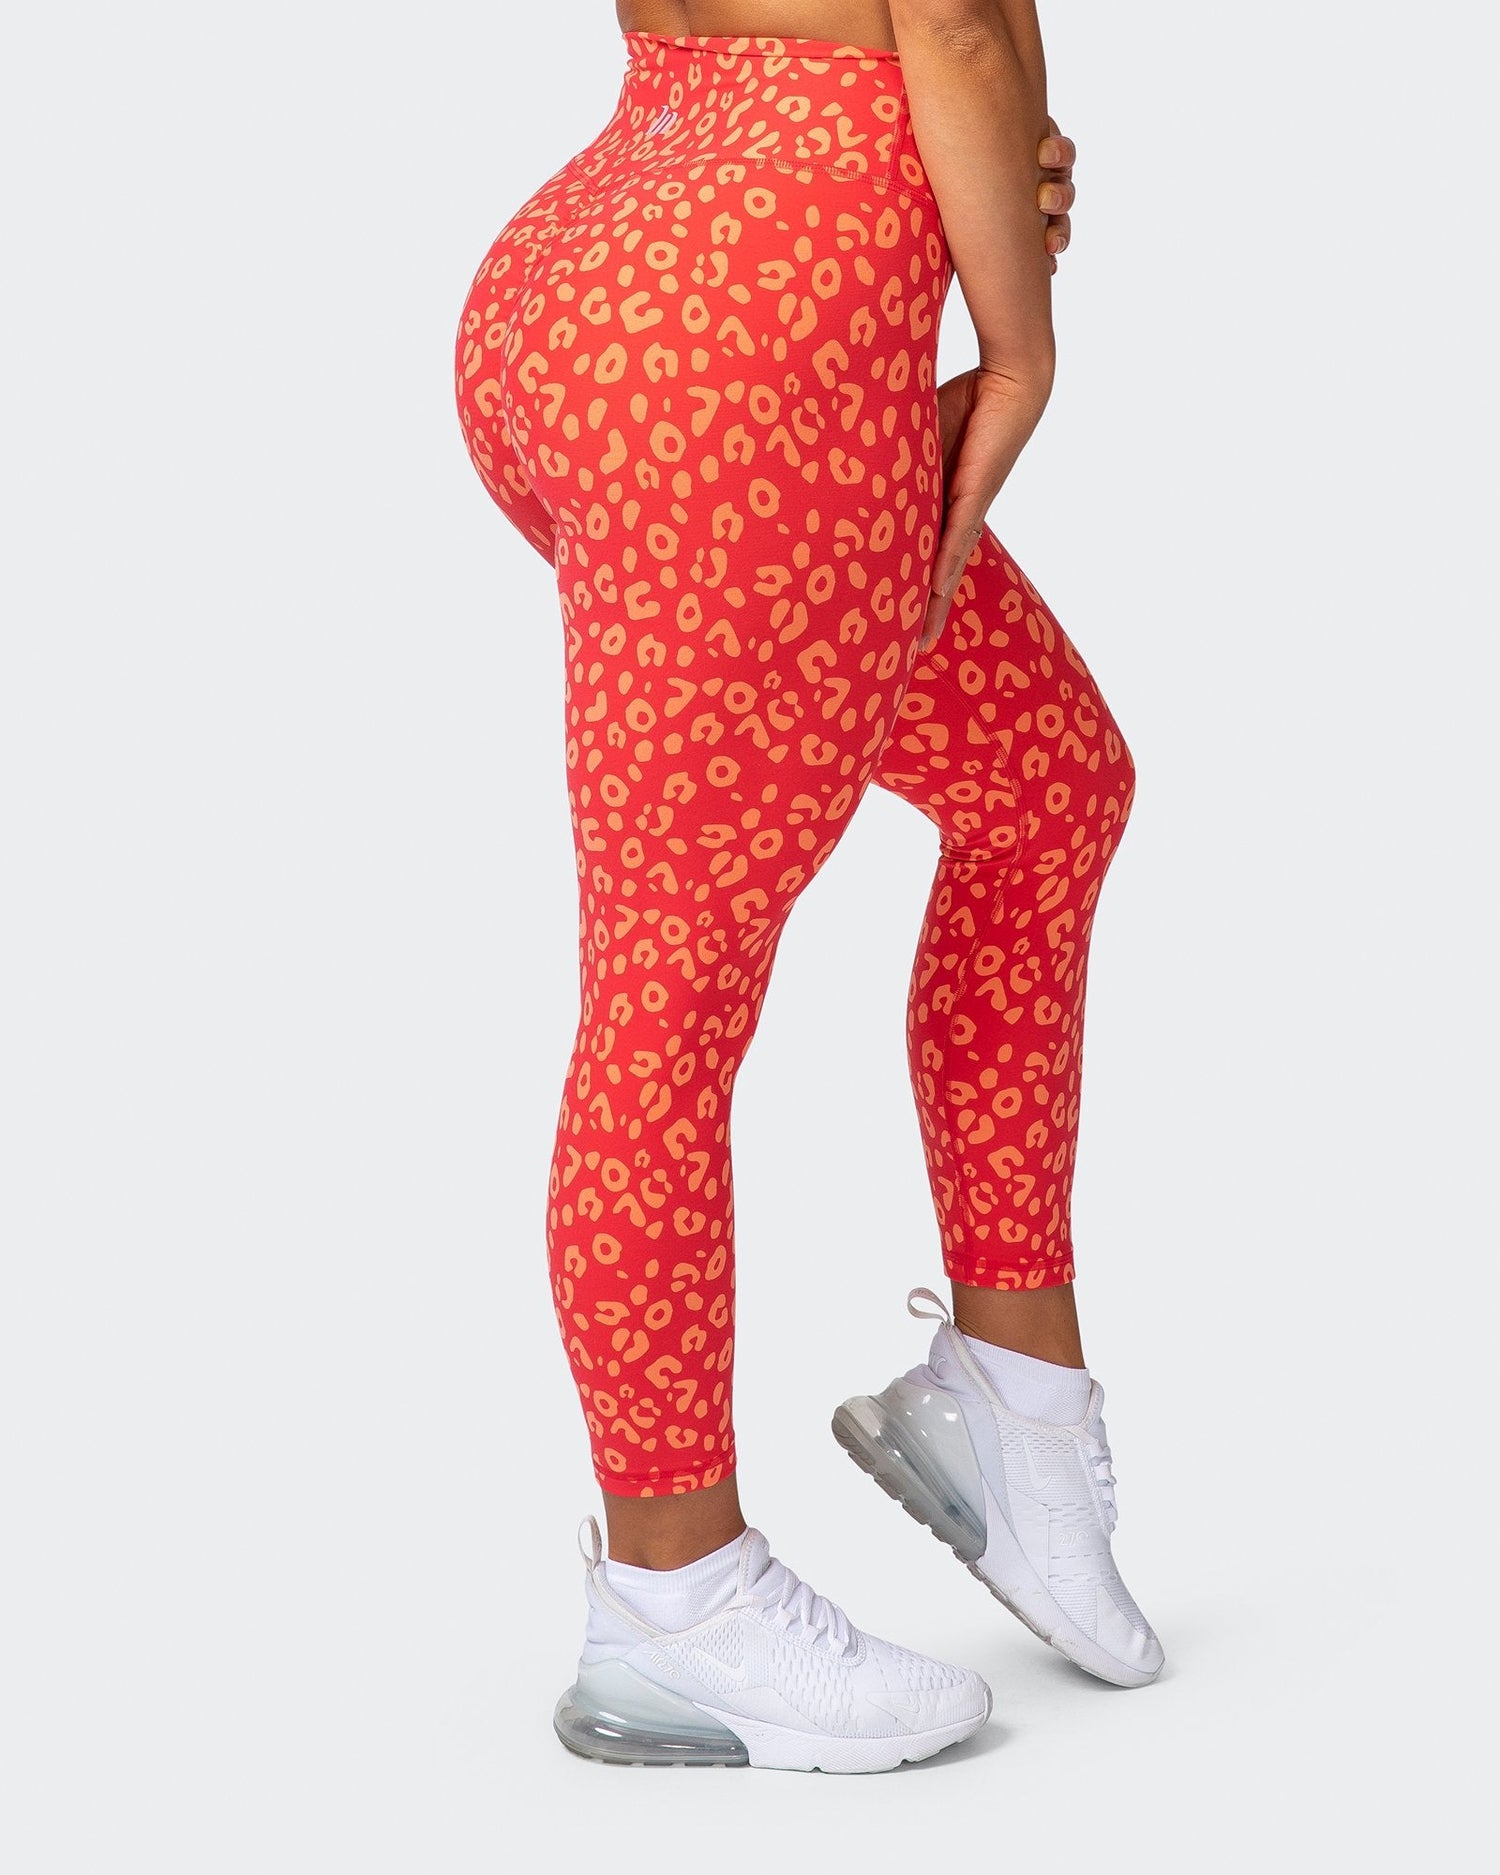 CRZ YOGA, Pants & Jumpsuits, Crz Yoga Leggings 25 Size Small Orange  Yellow Leopard Print